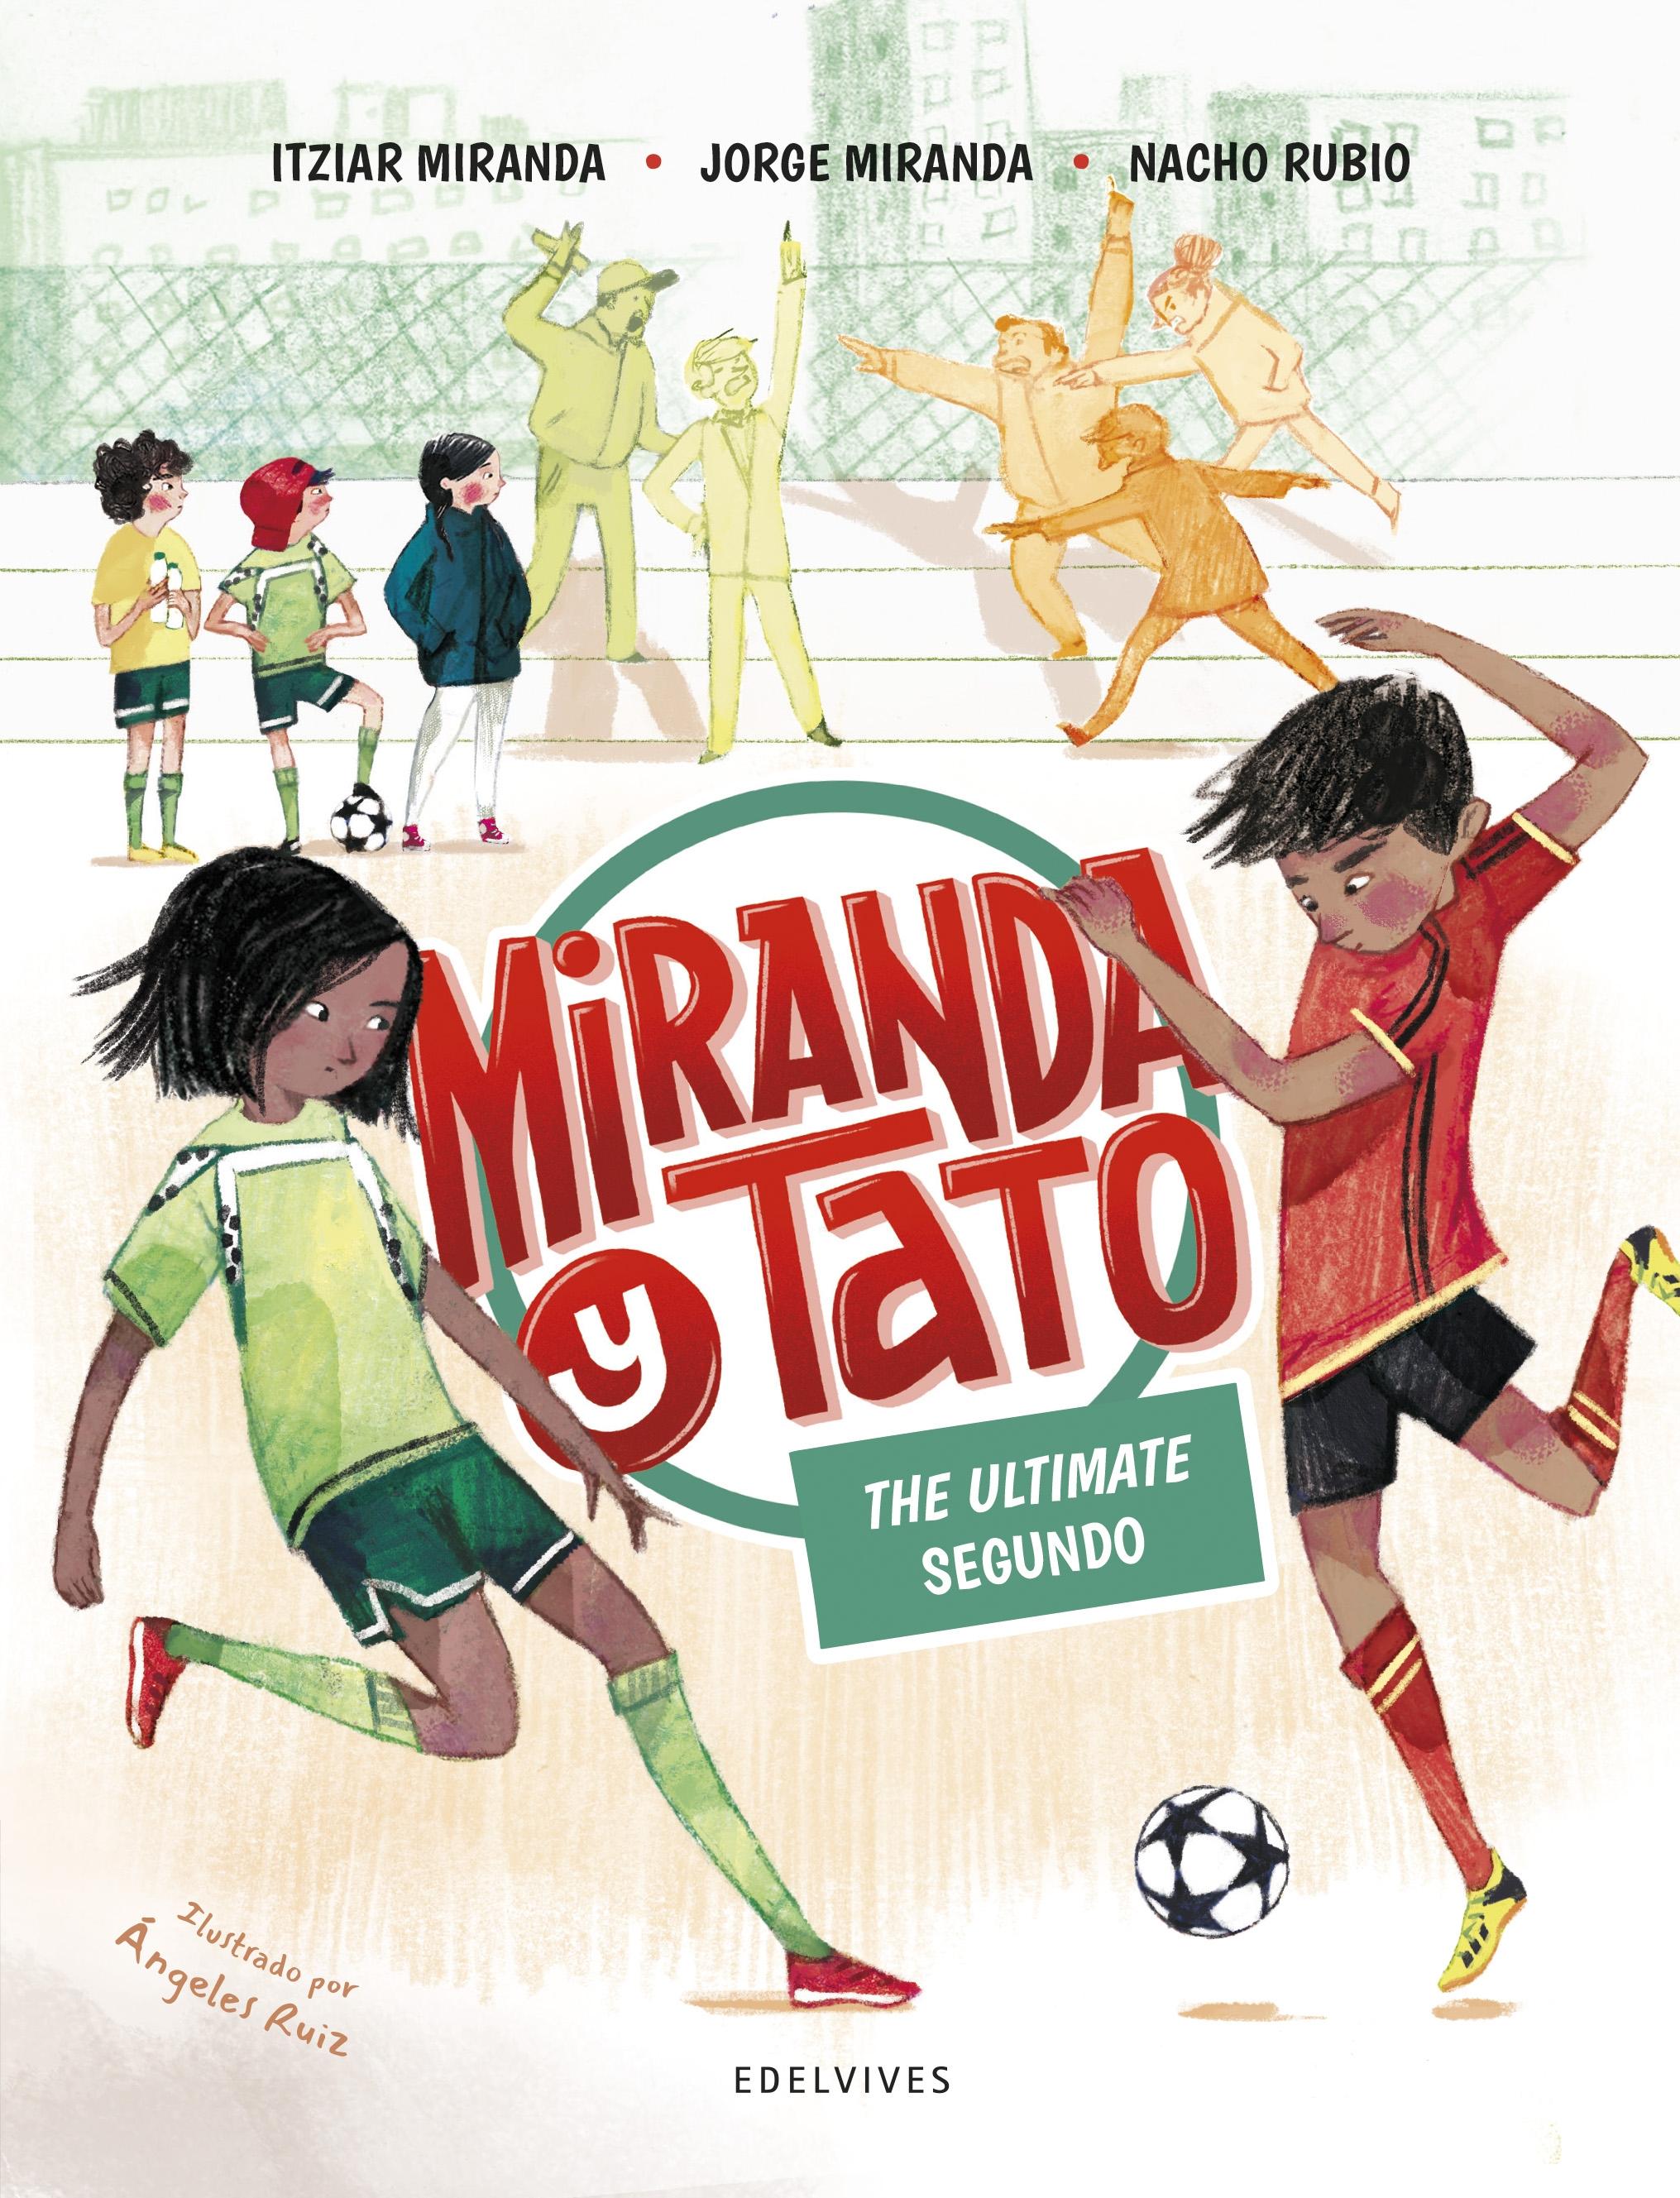 Miranda y Tato 6  "The Ultimate segundo"